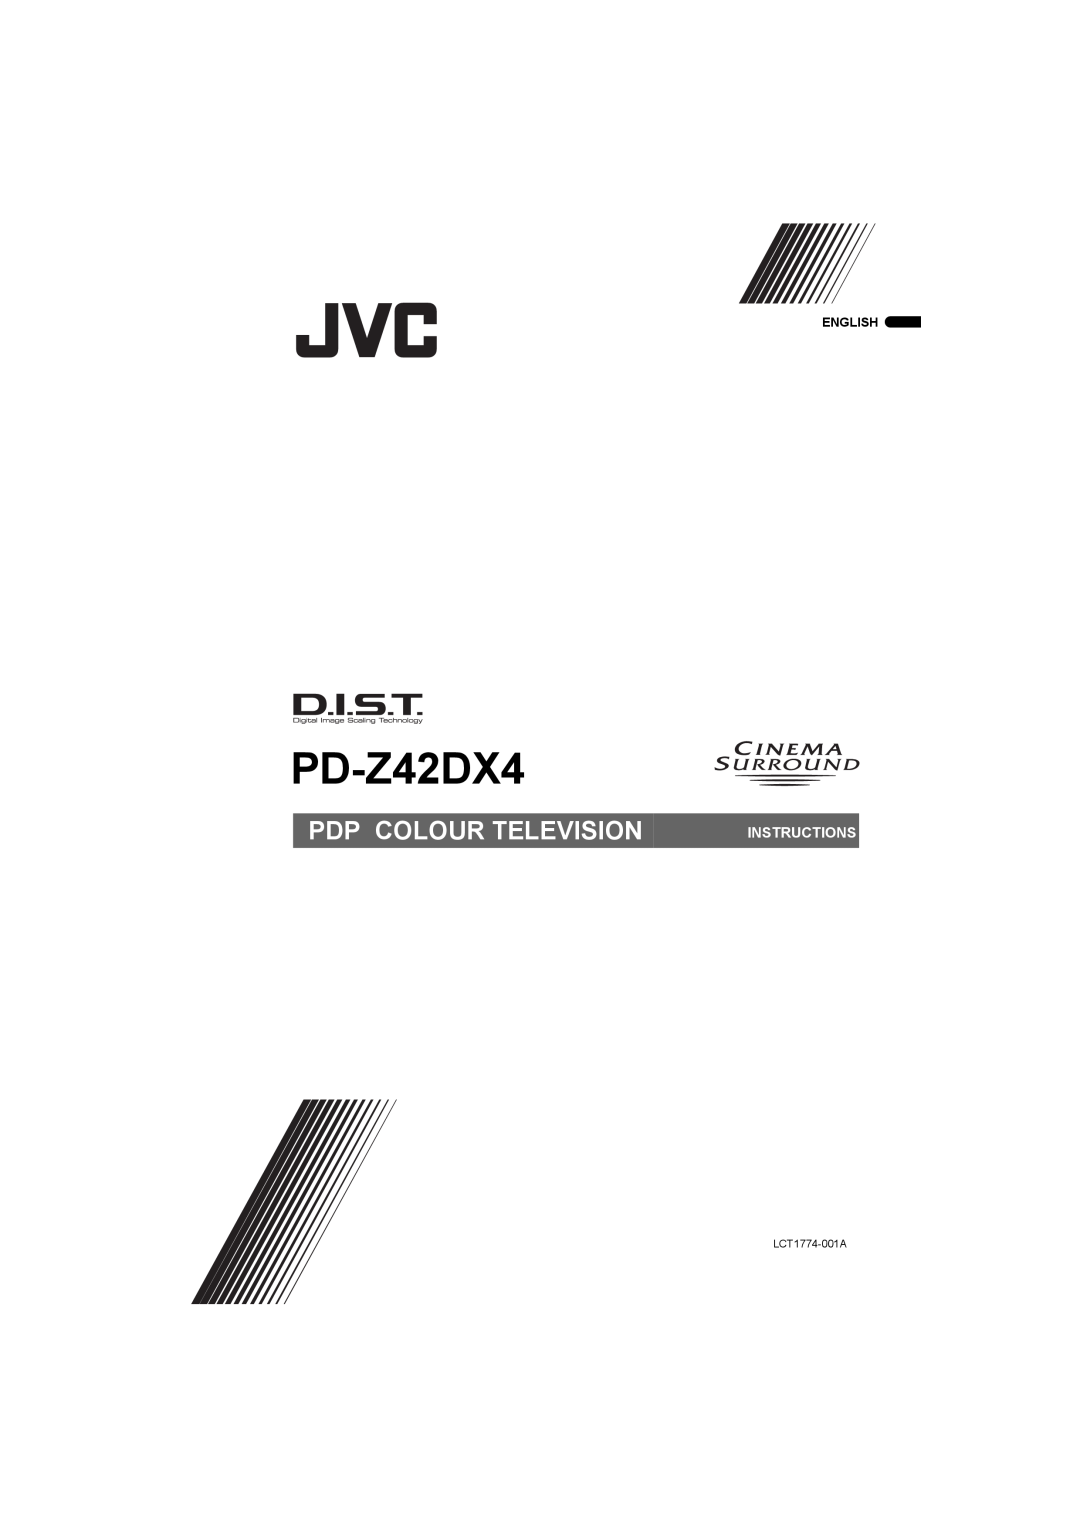 JVC 1004MKH-CR-VP manual PD-Z42DX4, Pdp Colour Television, Instructions, English, LCT1774-001A 